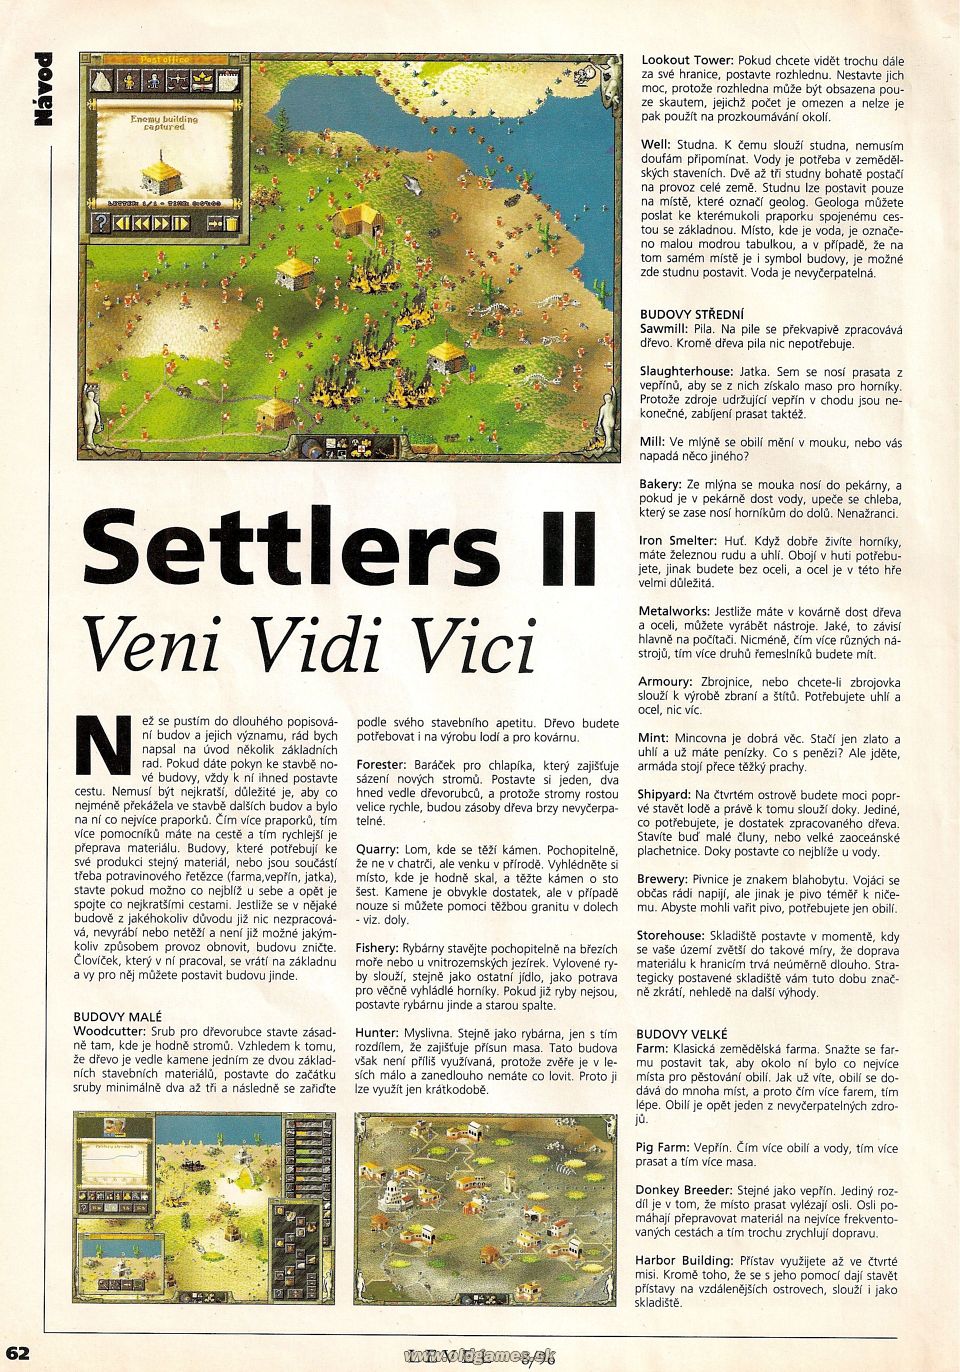 Settlers 2: Veni Vidi Vici - Návod